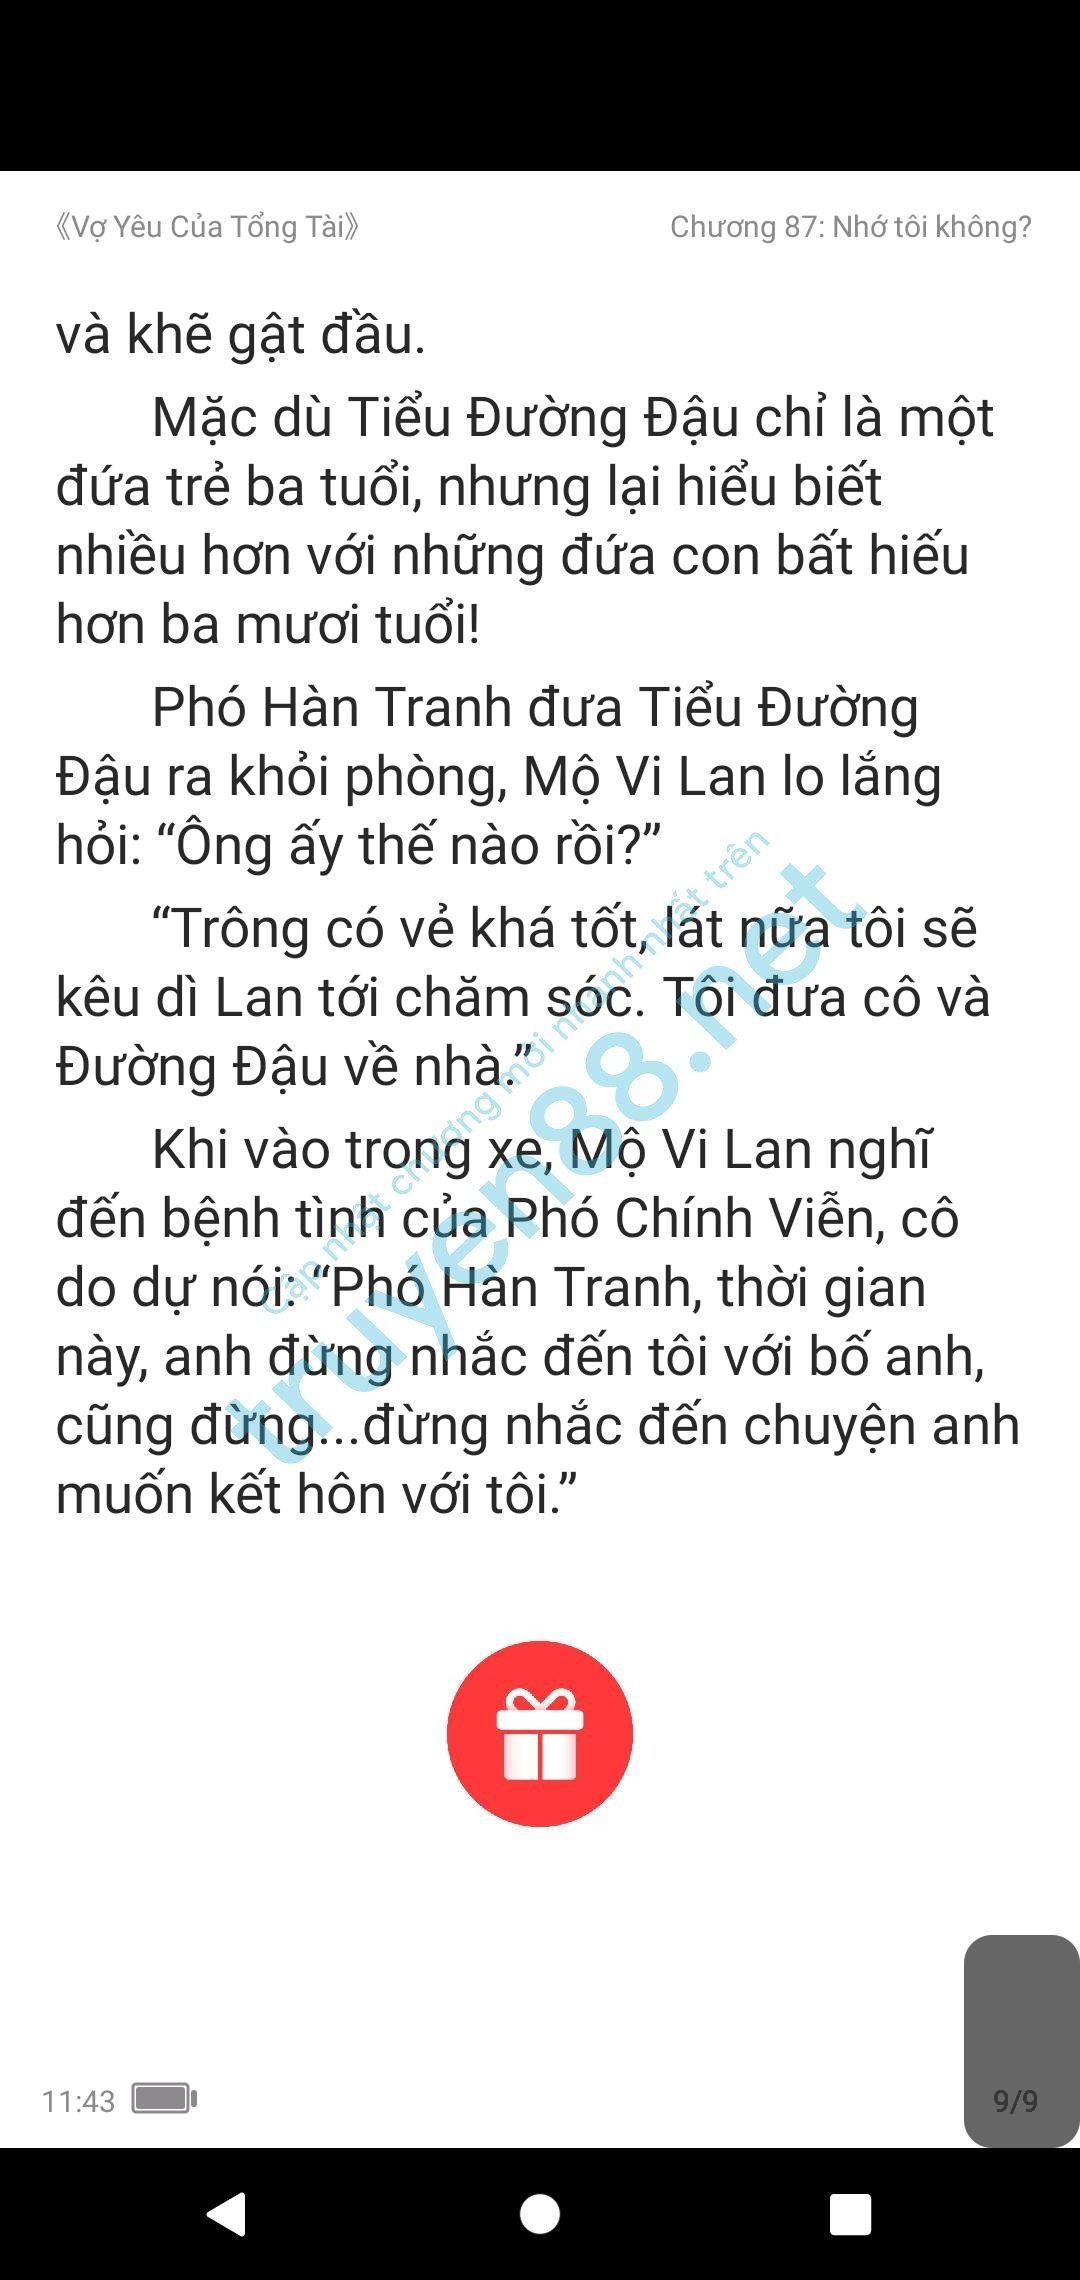 vo-yeu-cua-tong-tai-mo-vi-lan--pho-han-tranh-87-2